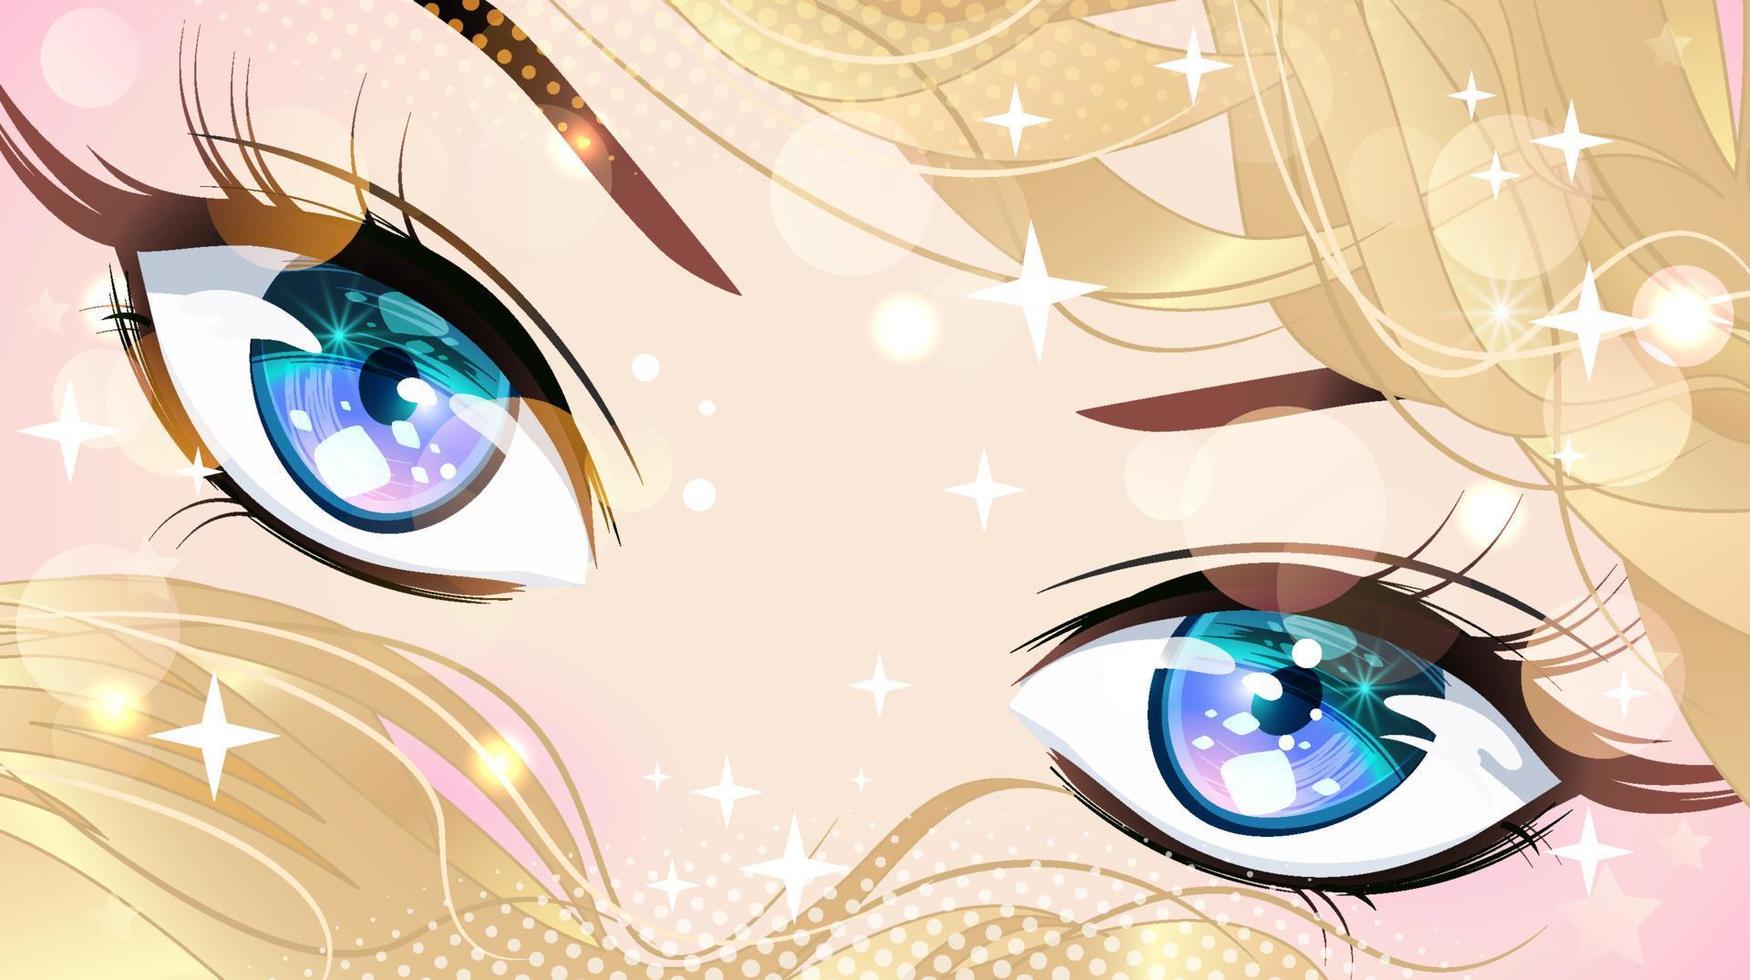 ojos azules de una chica de pelo rubio con lentejuelas al estilo anime.  5858599 Vector en Vecteezy